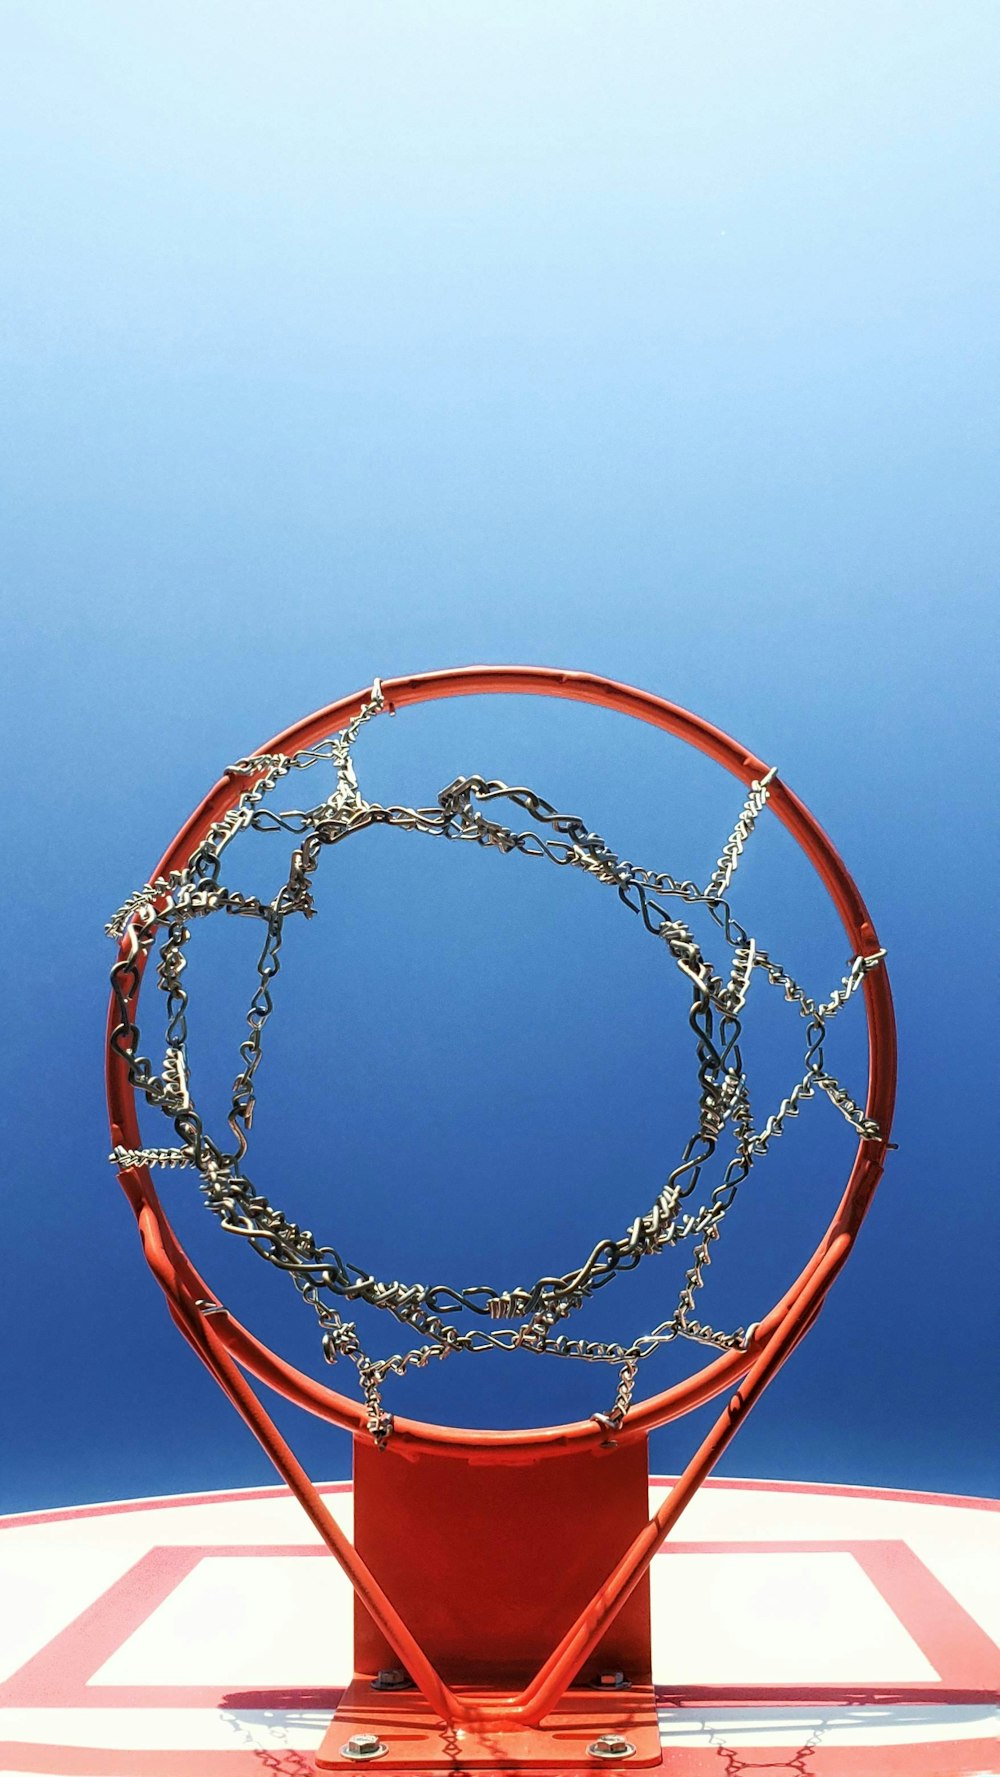 photo of basketball hoops